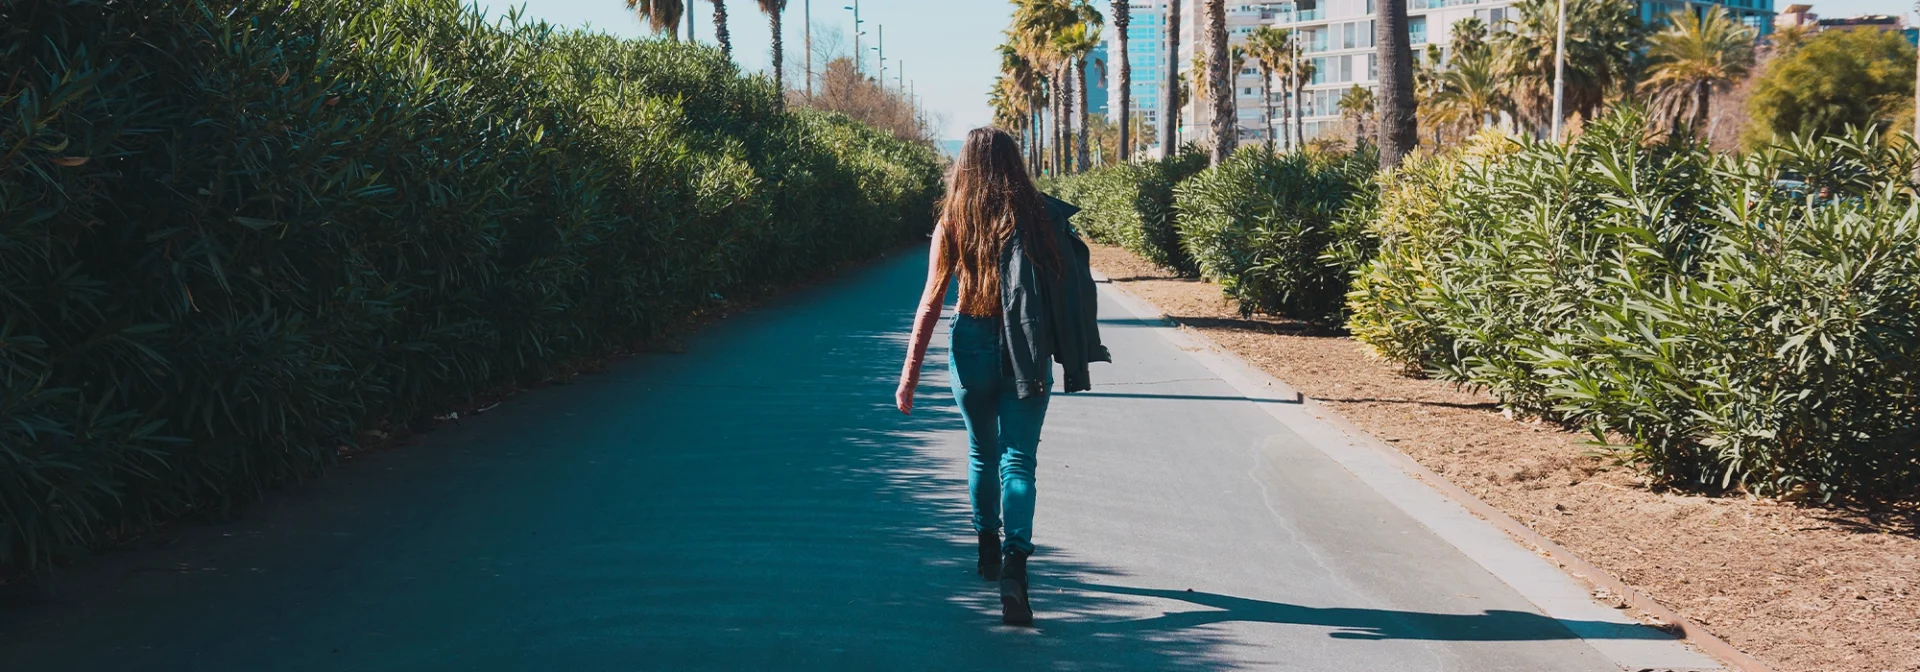 teen walking away on sidewalk outside, independent teenager